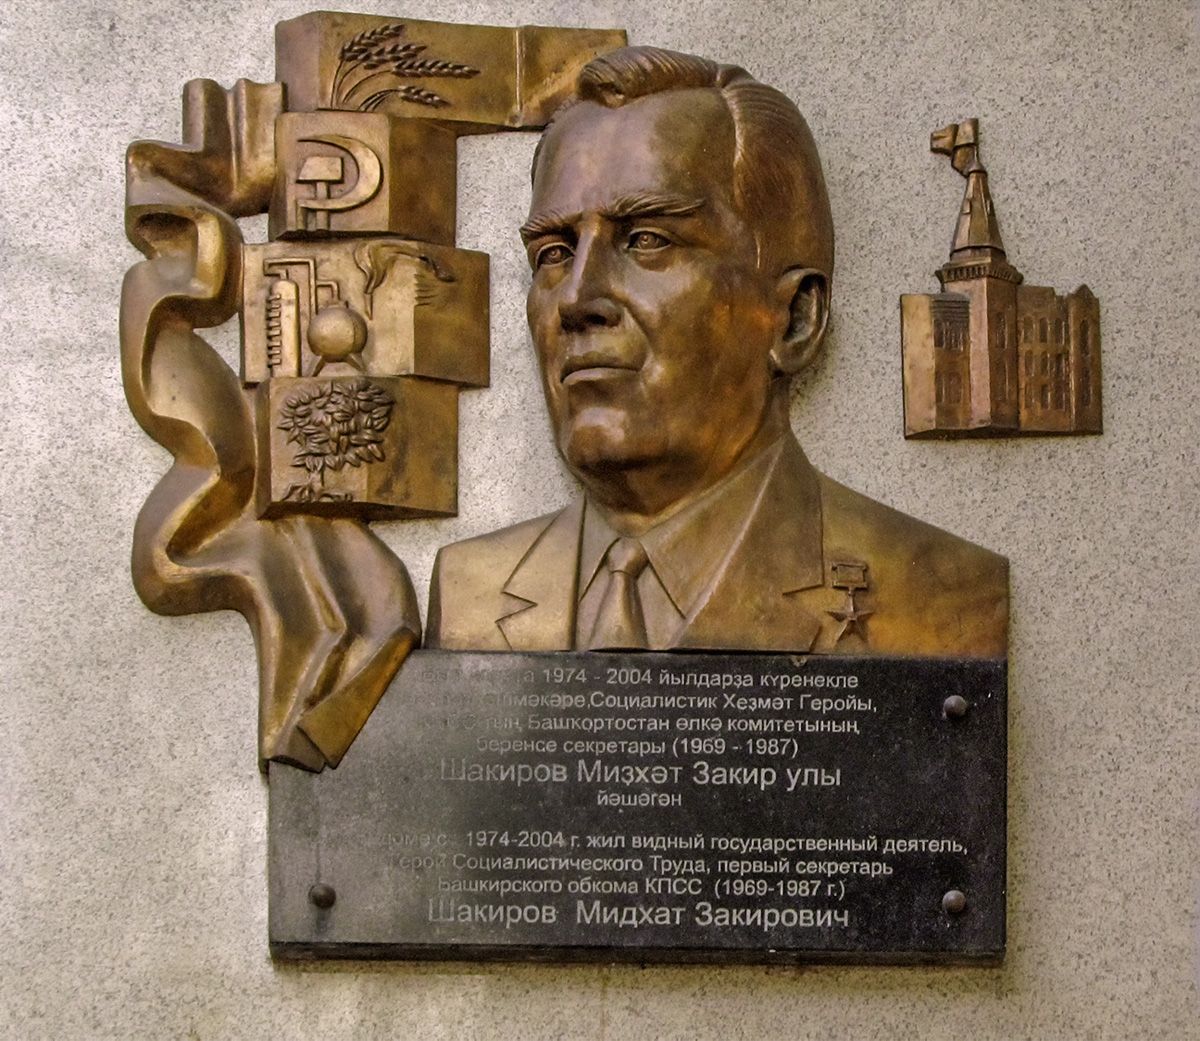 Ufa, Улица Энгельса, 1. Ufa — Memorial plaques